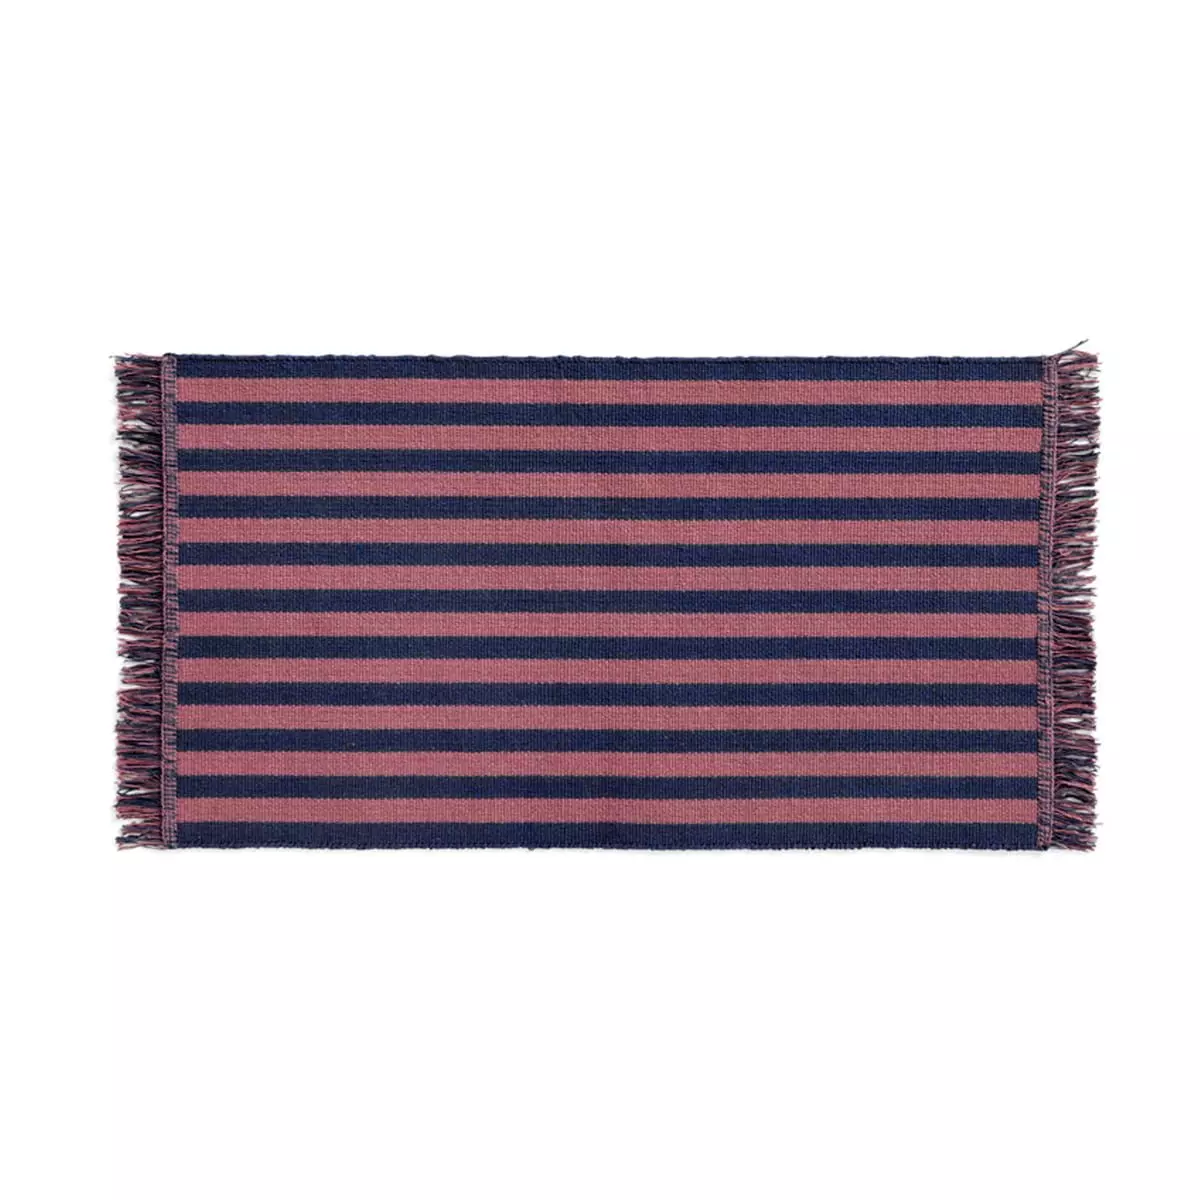 Hay Stripes And Stripes Doormat Navy